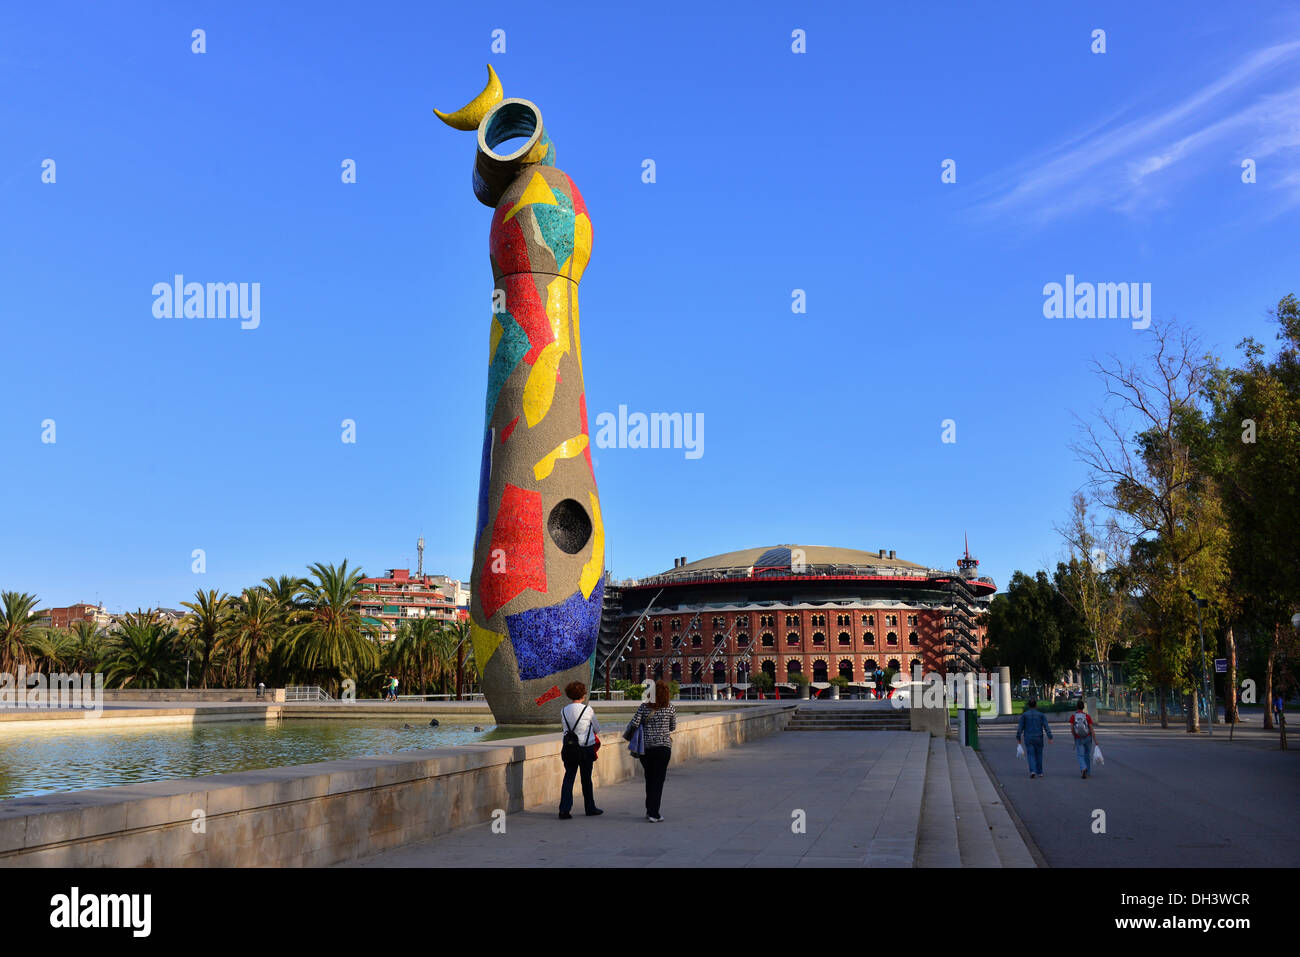 The Miro Fountain in Barcelona Stock Photo - Alamy